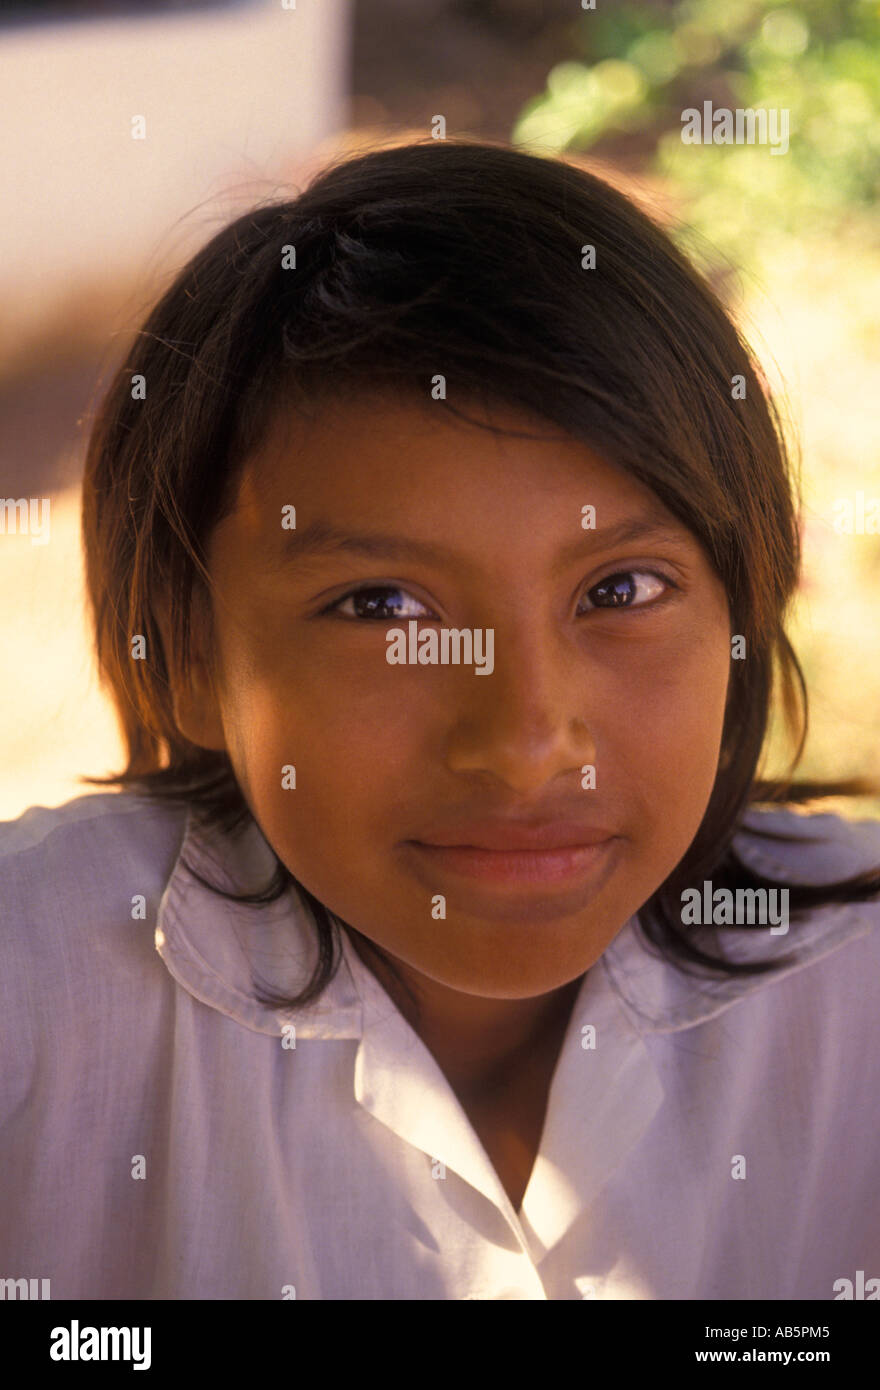 1, one, Maya girl, Mayan girl, young girl, child, eye contact, front view, smiling, town of Tahmek, Tahmek, Yucatan State, Yucatan Peninsula, Mexico Stock Photo